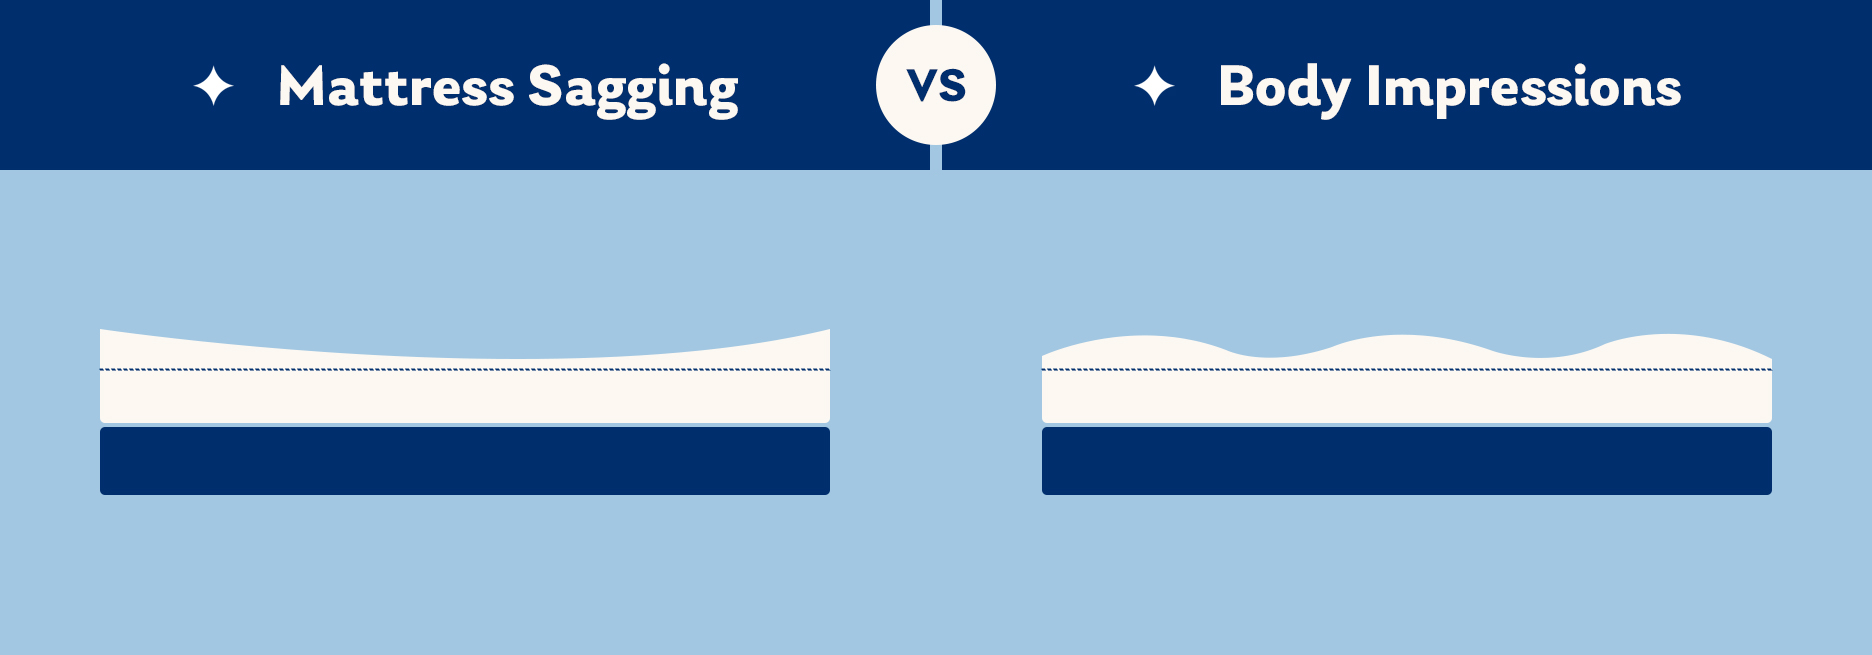 Mattress Sagging vs Body Impression